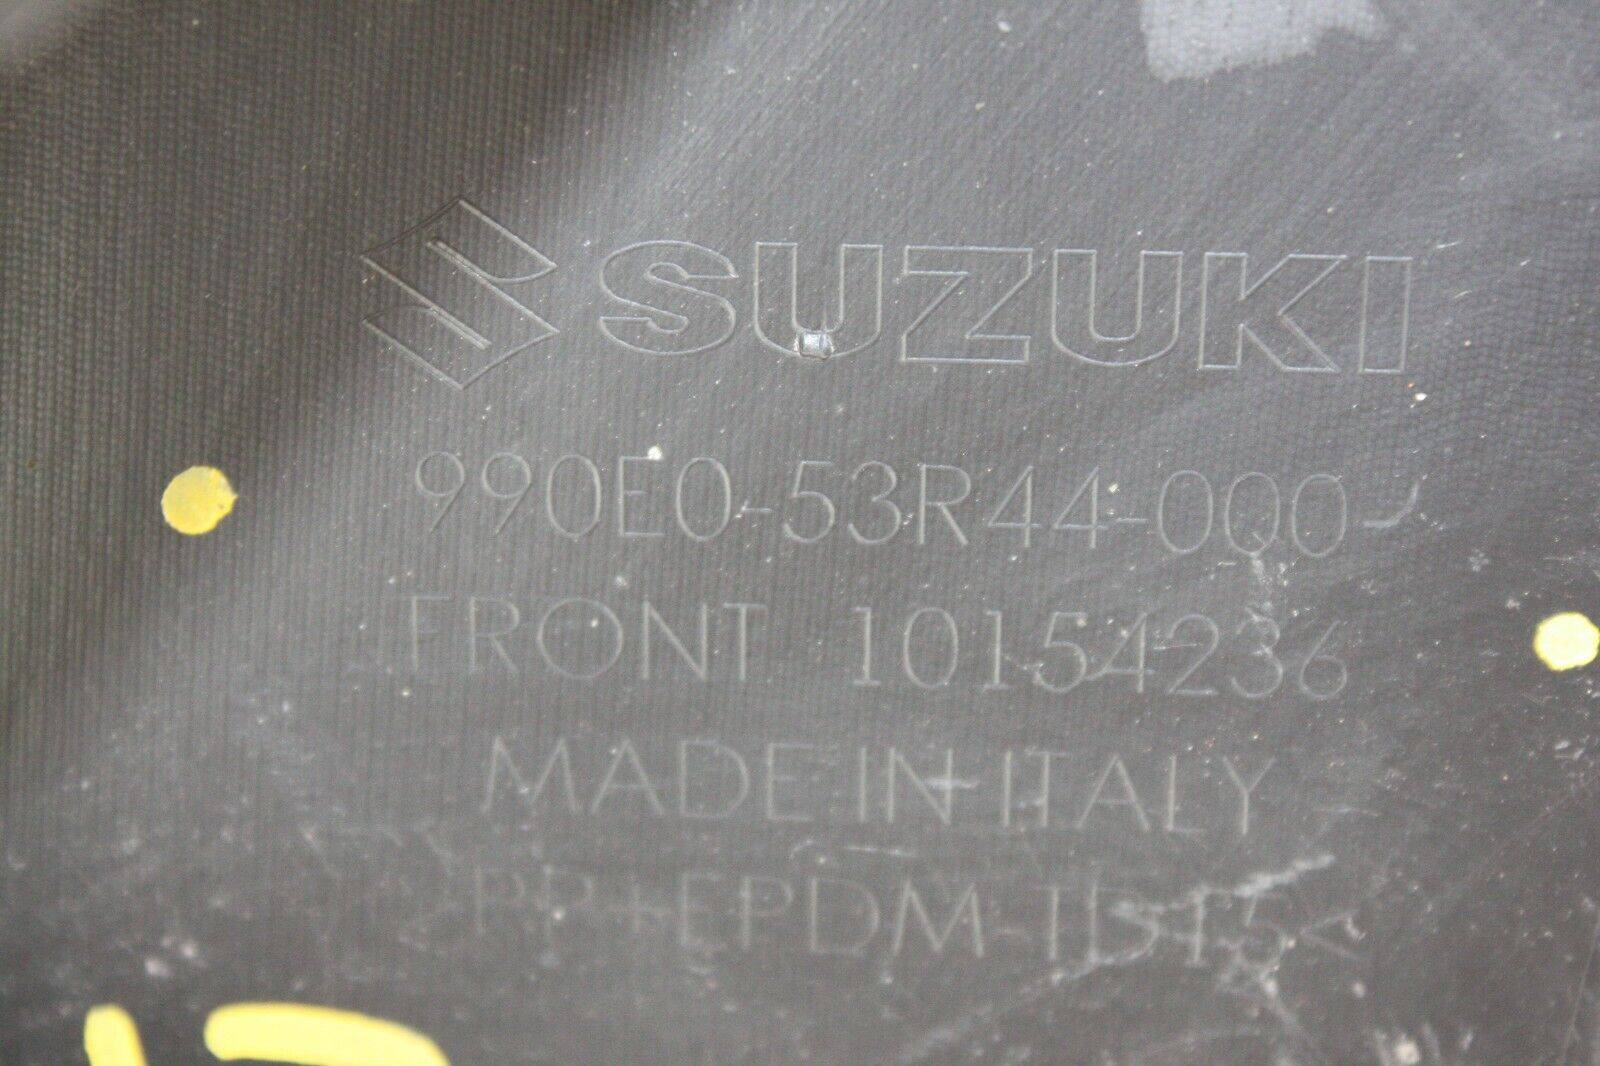 Suzuki-Swift-Front-Bumper-Lower-Carbon-Section-990E0-53R44-000-Genuine-175367542226-12